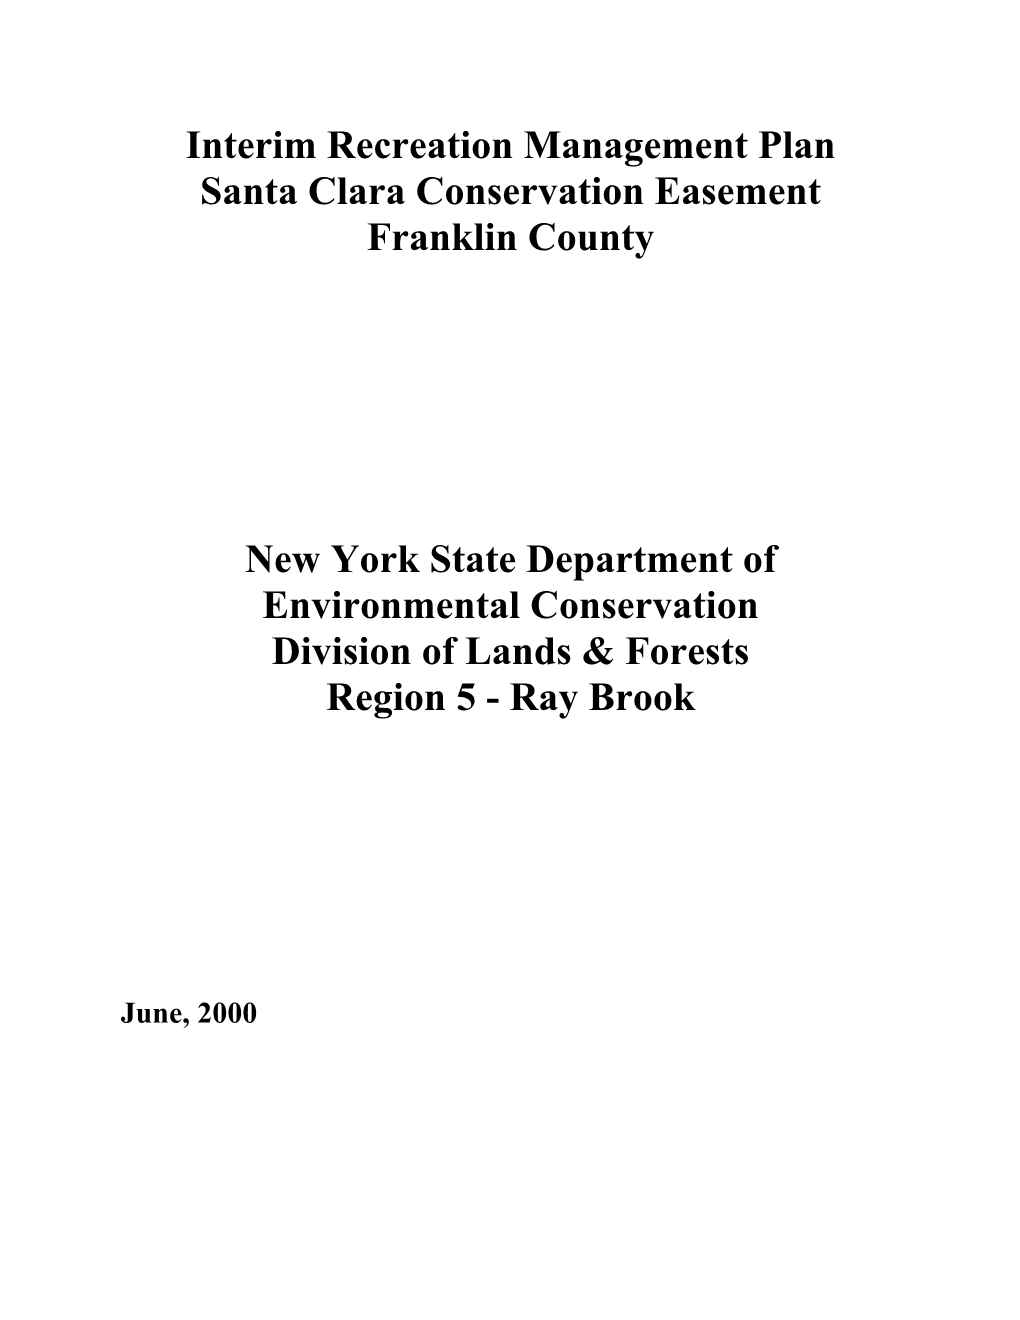 Interim Recreation Management Plan Santa Clara Conservation Easement Franklin County